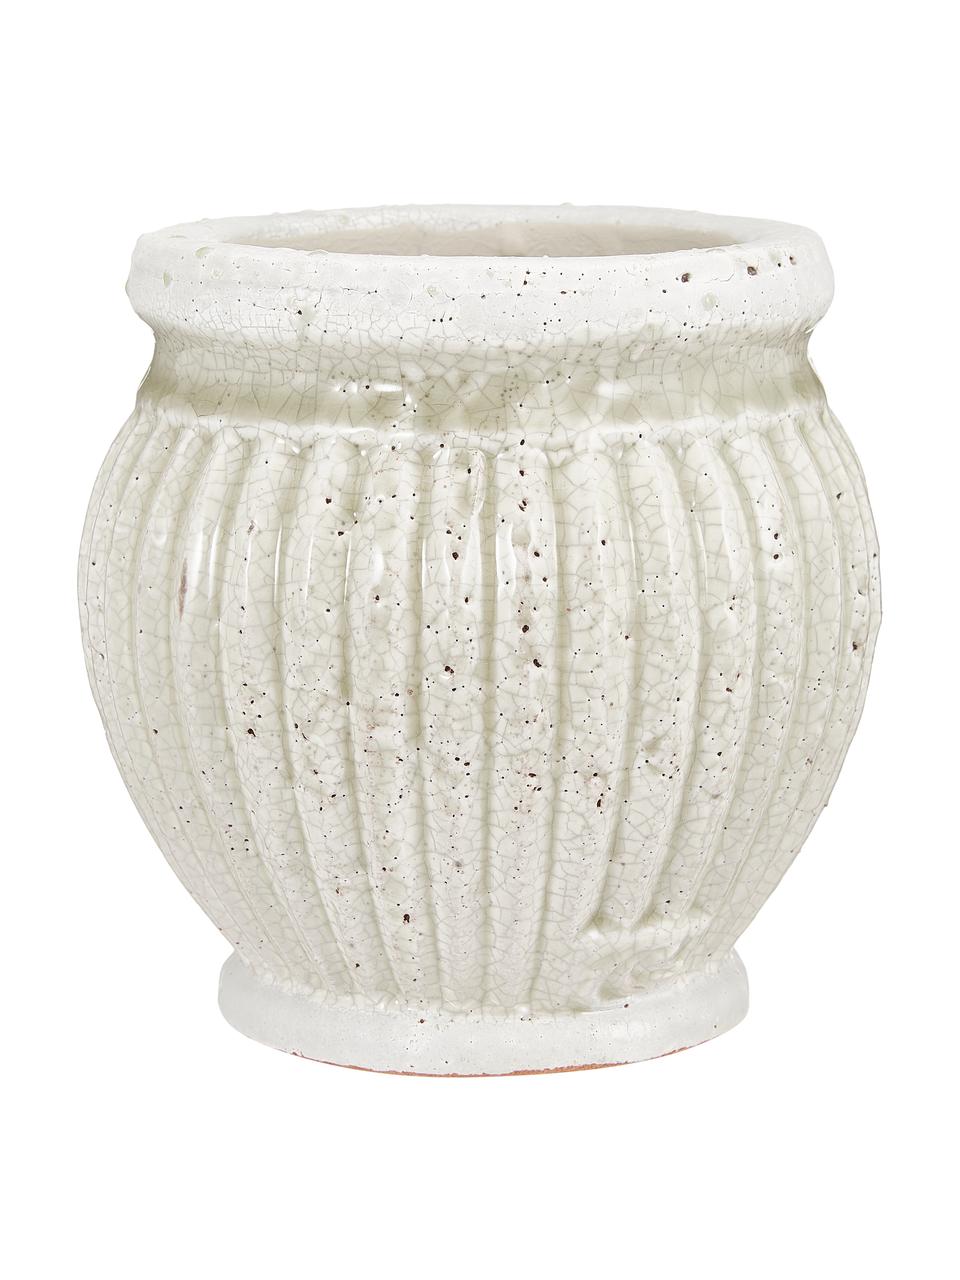 Malý ručně vyrobený květináč z keramiky Catinia, Keramika, Hnědá, Ø 14 cm, V 14 cm